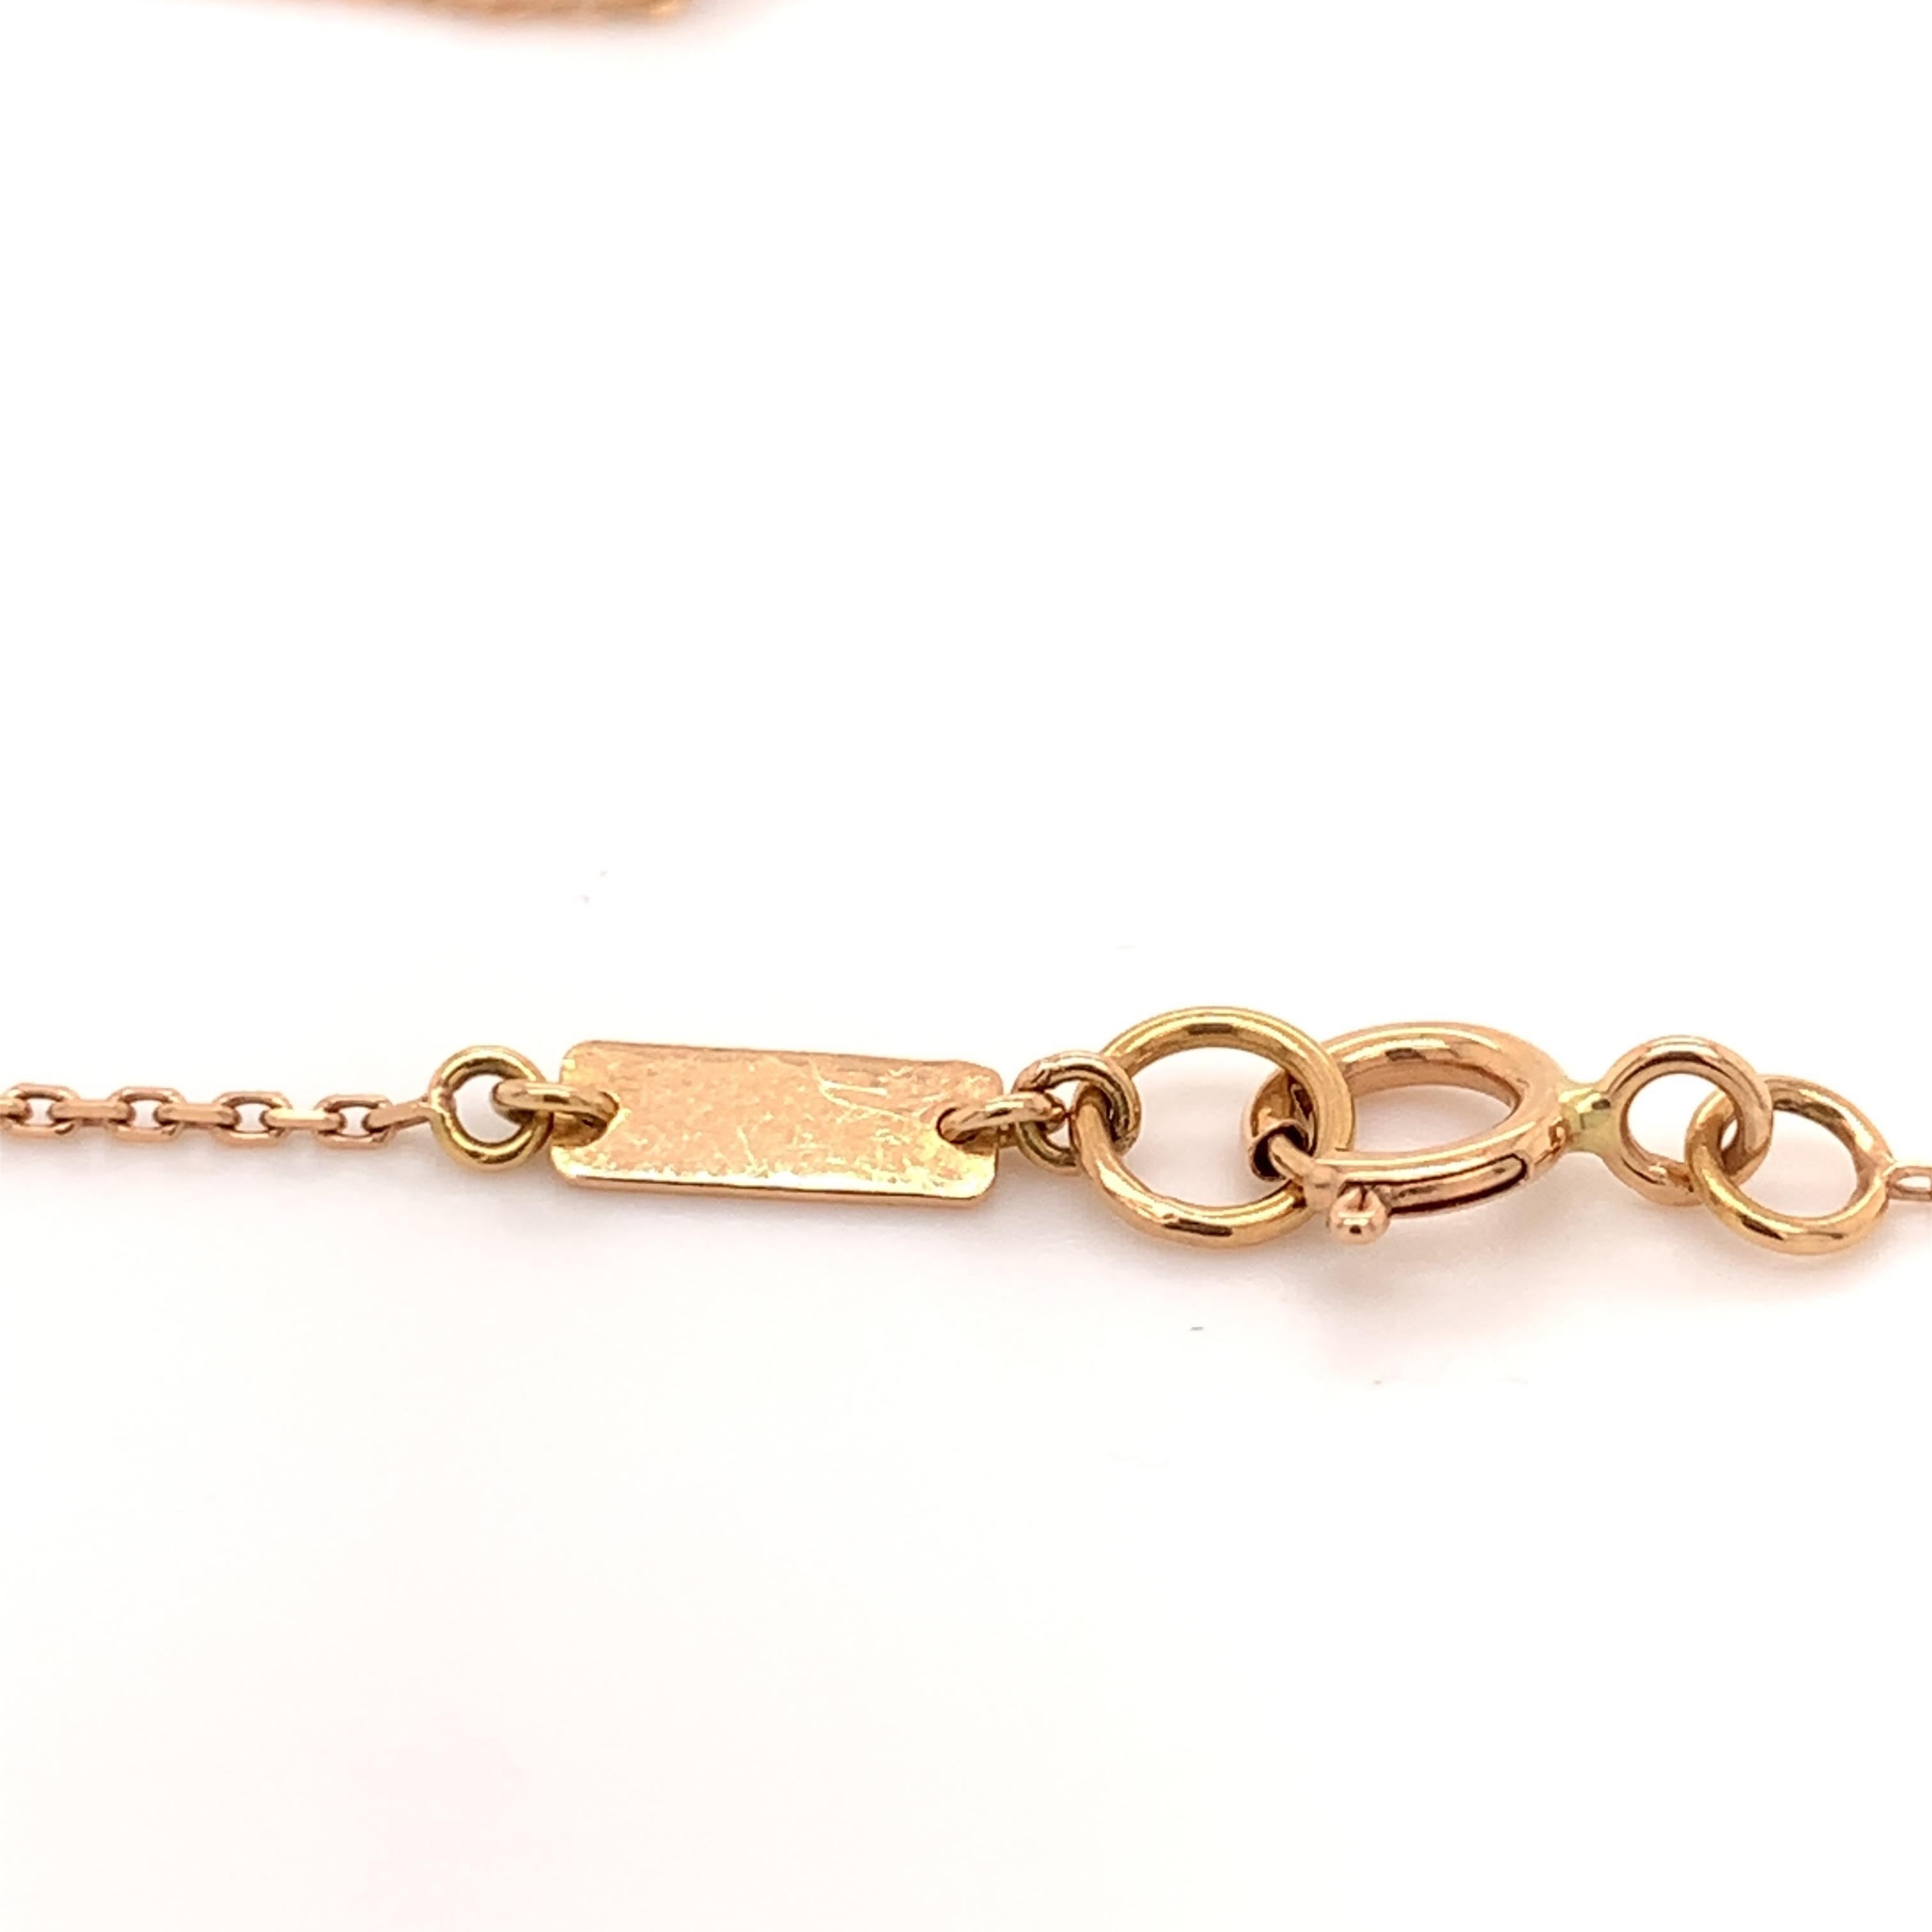 Oval Cut 1.88 Carat Intense Pink Sapphire Pendant Necklace